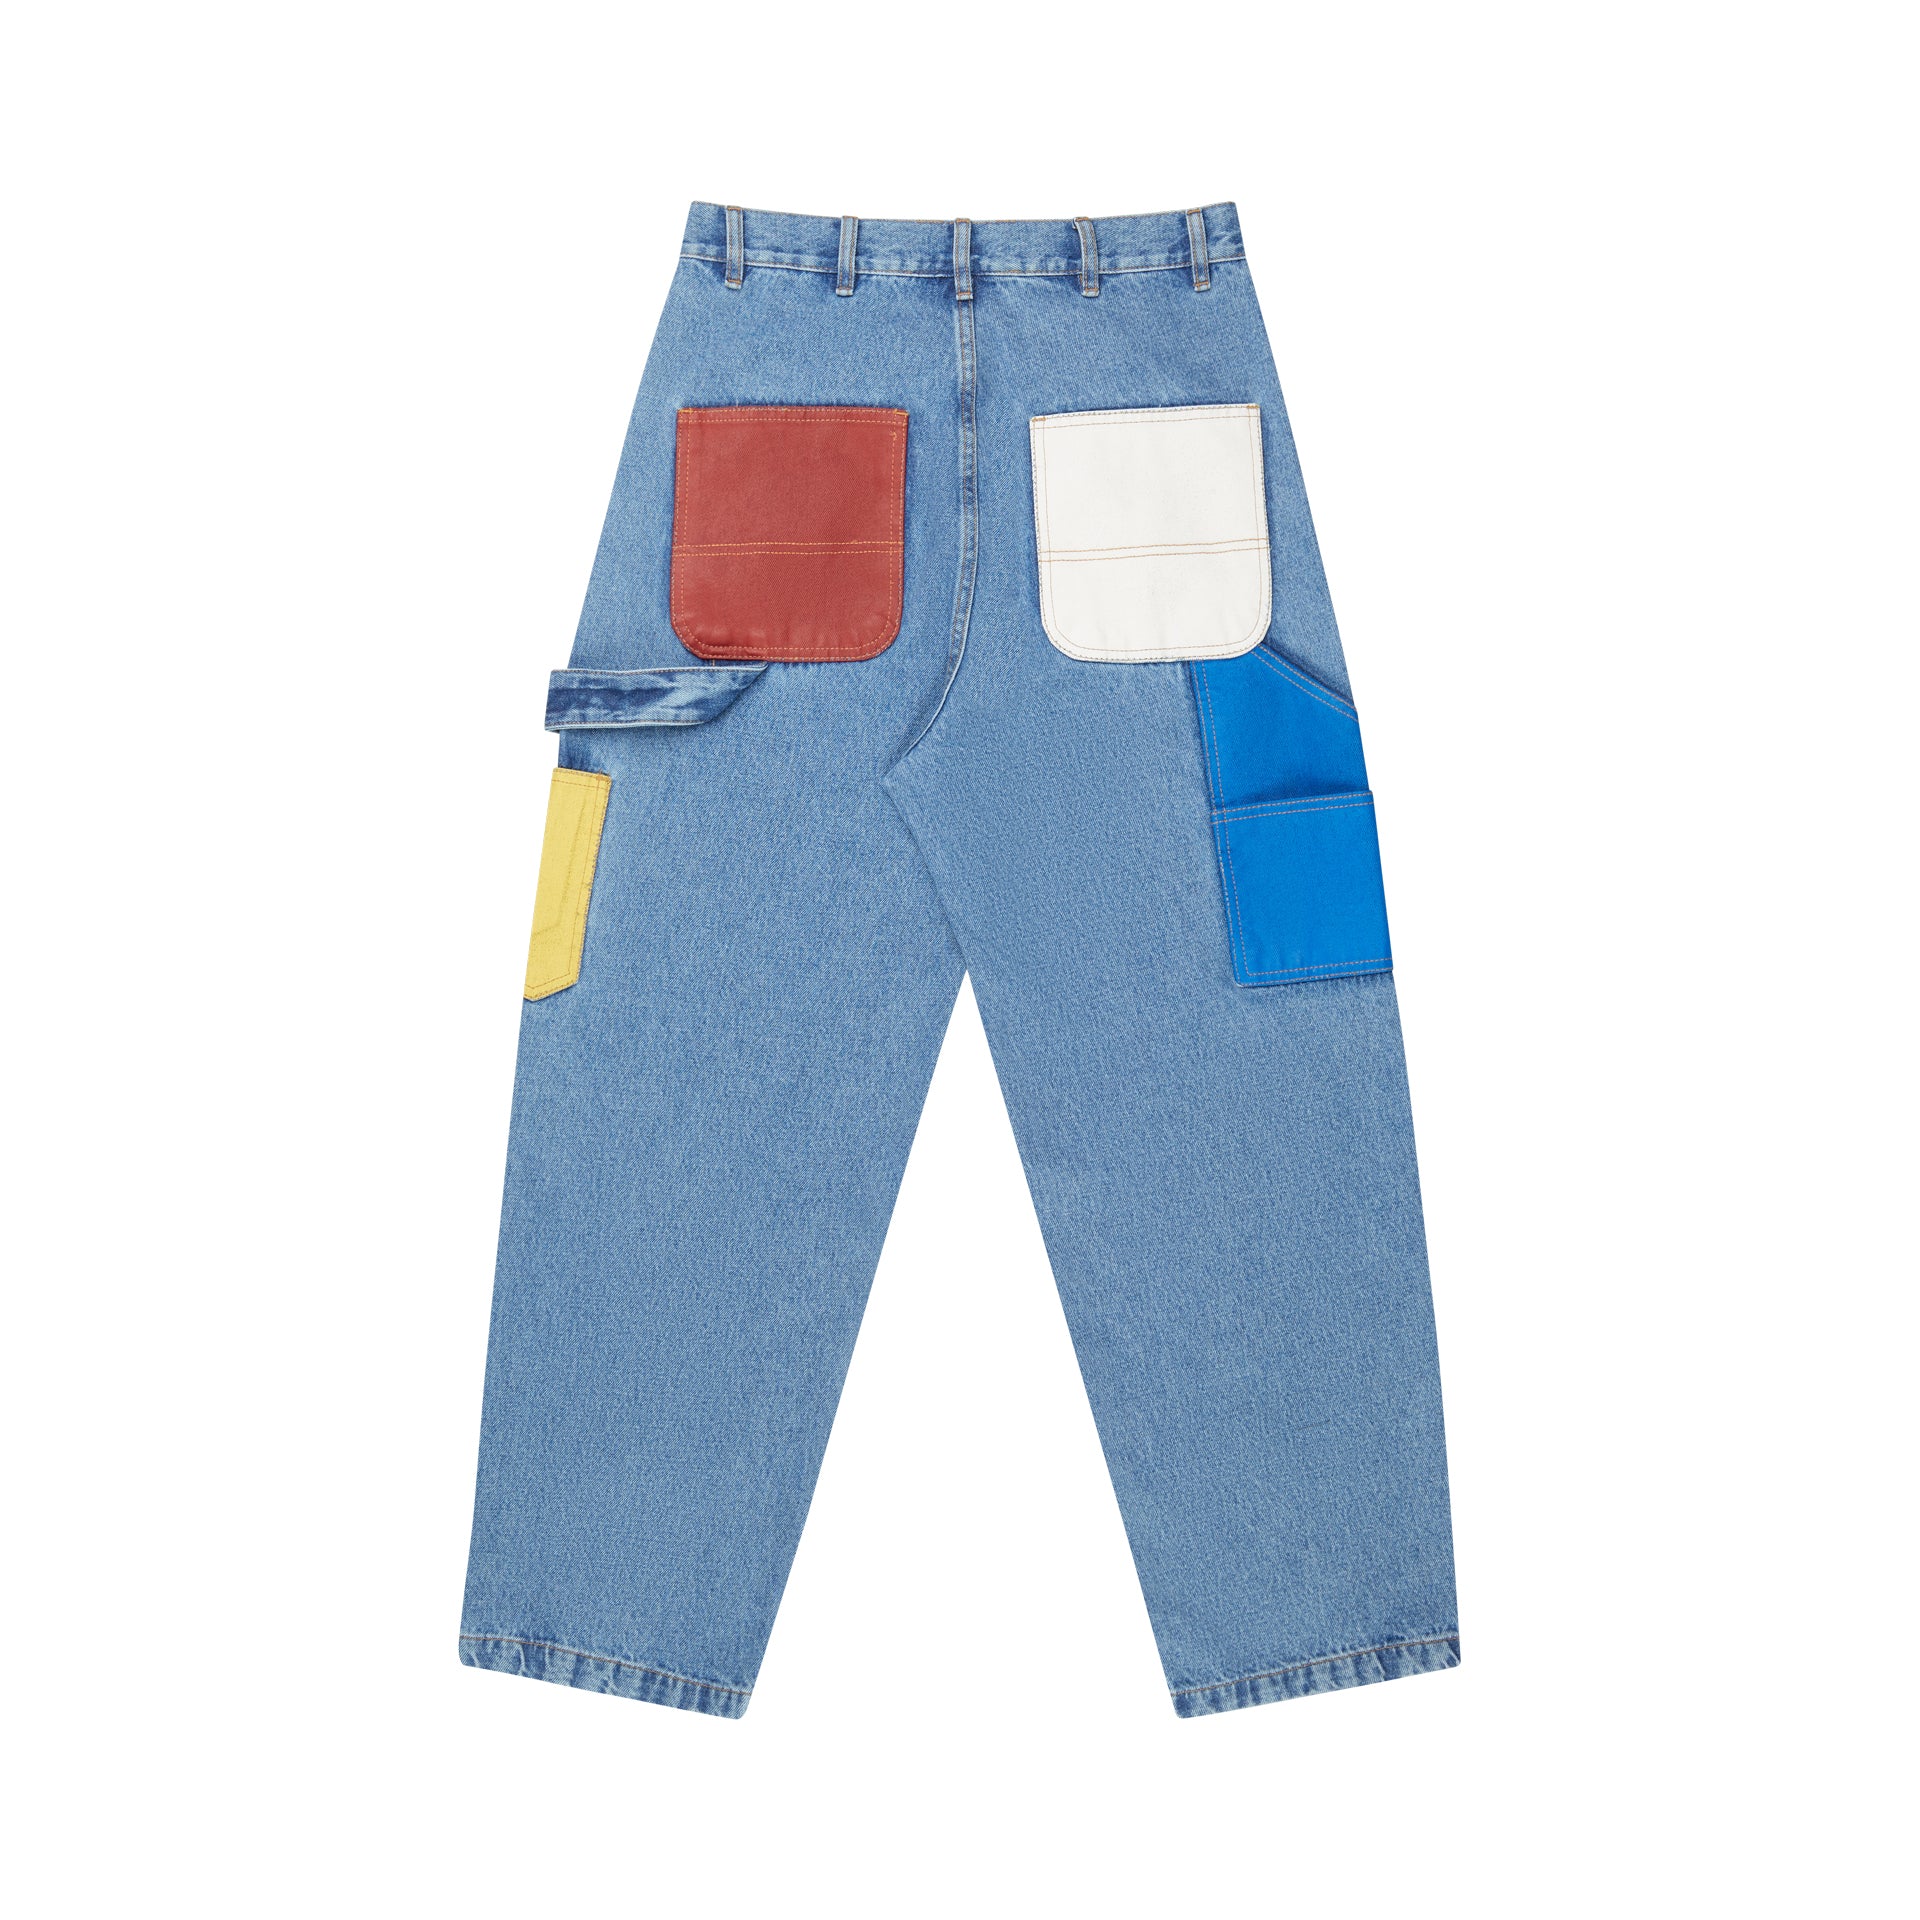 CLASS - Jeans Pants Primary Colors Light Blue